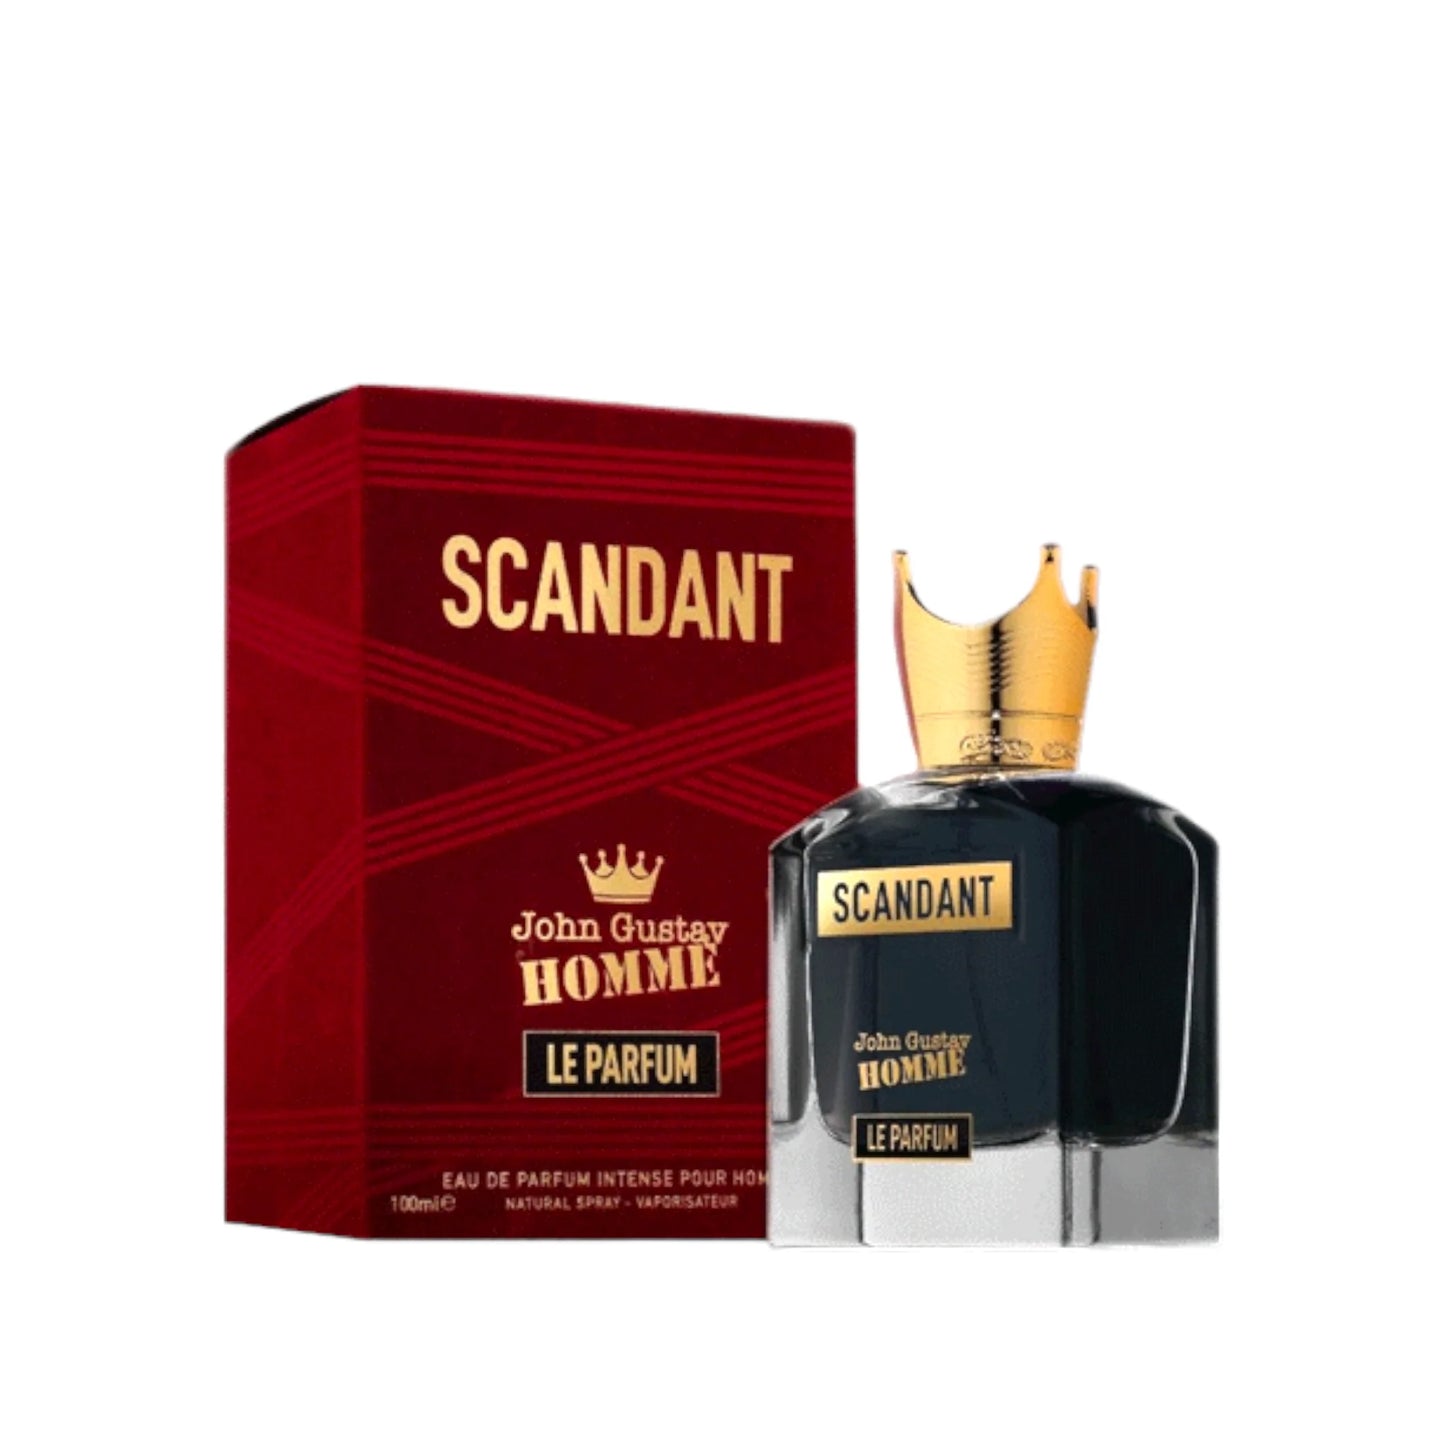 John Gustav Homme Scandant Le Parfum Eau De Parfum 100ml Fragrance World